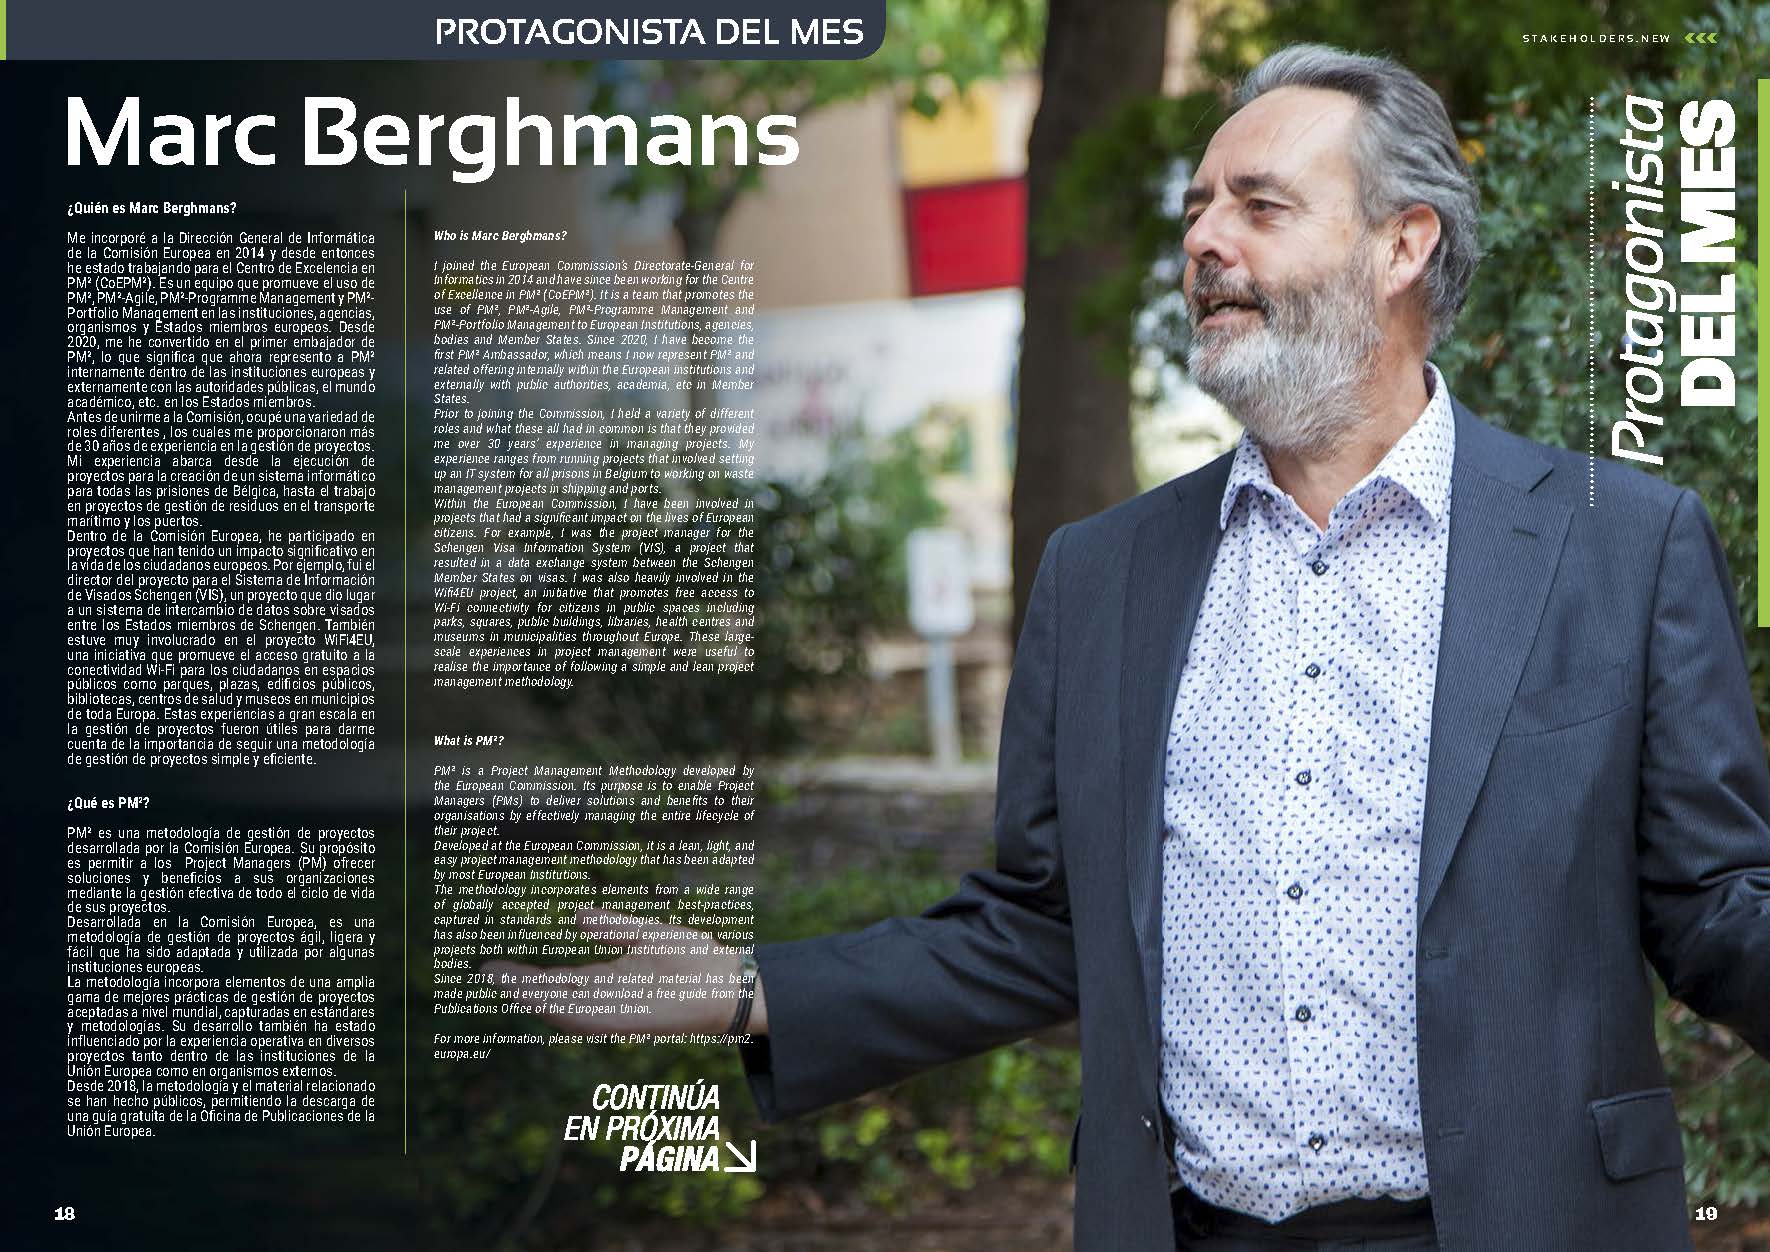 Marc Berghmans “Protagonista del Mes” de la Revista Stakeholders.news de noviembre de 2022